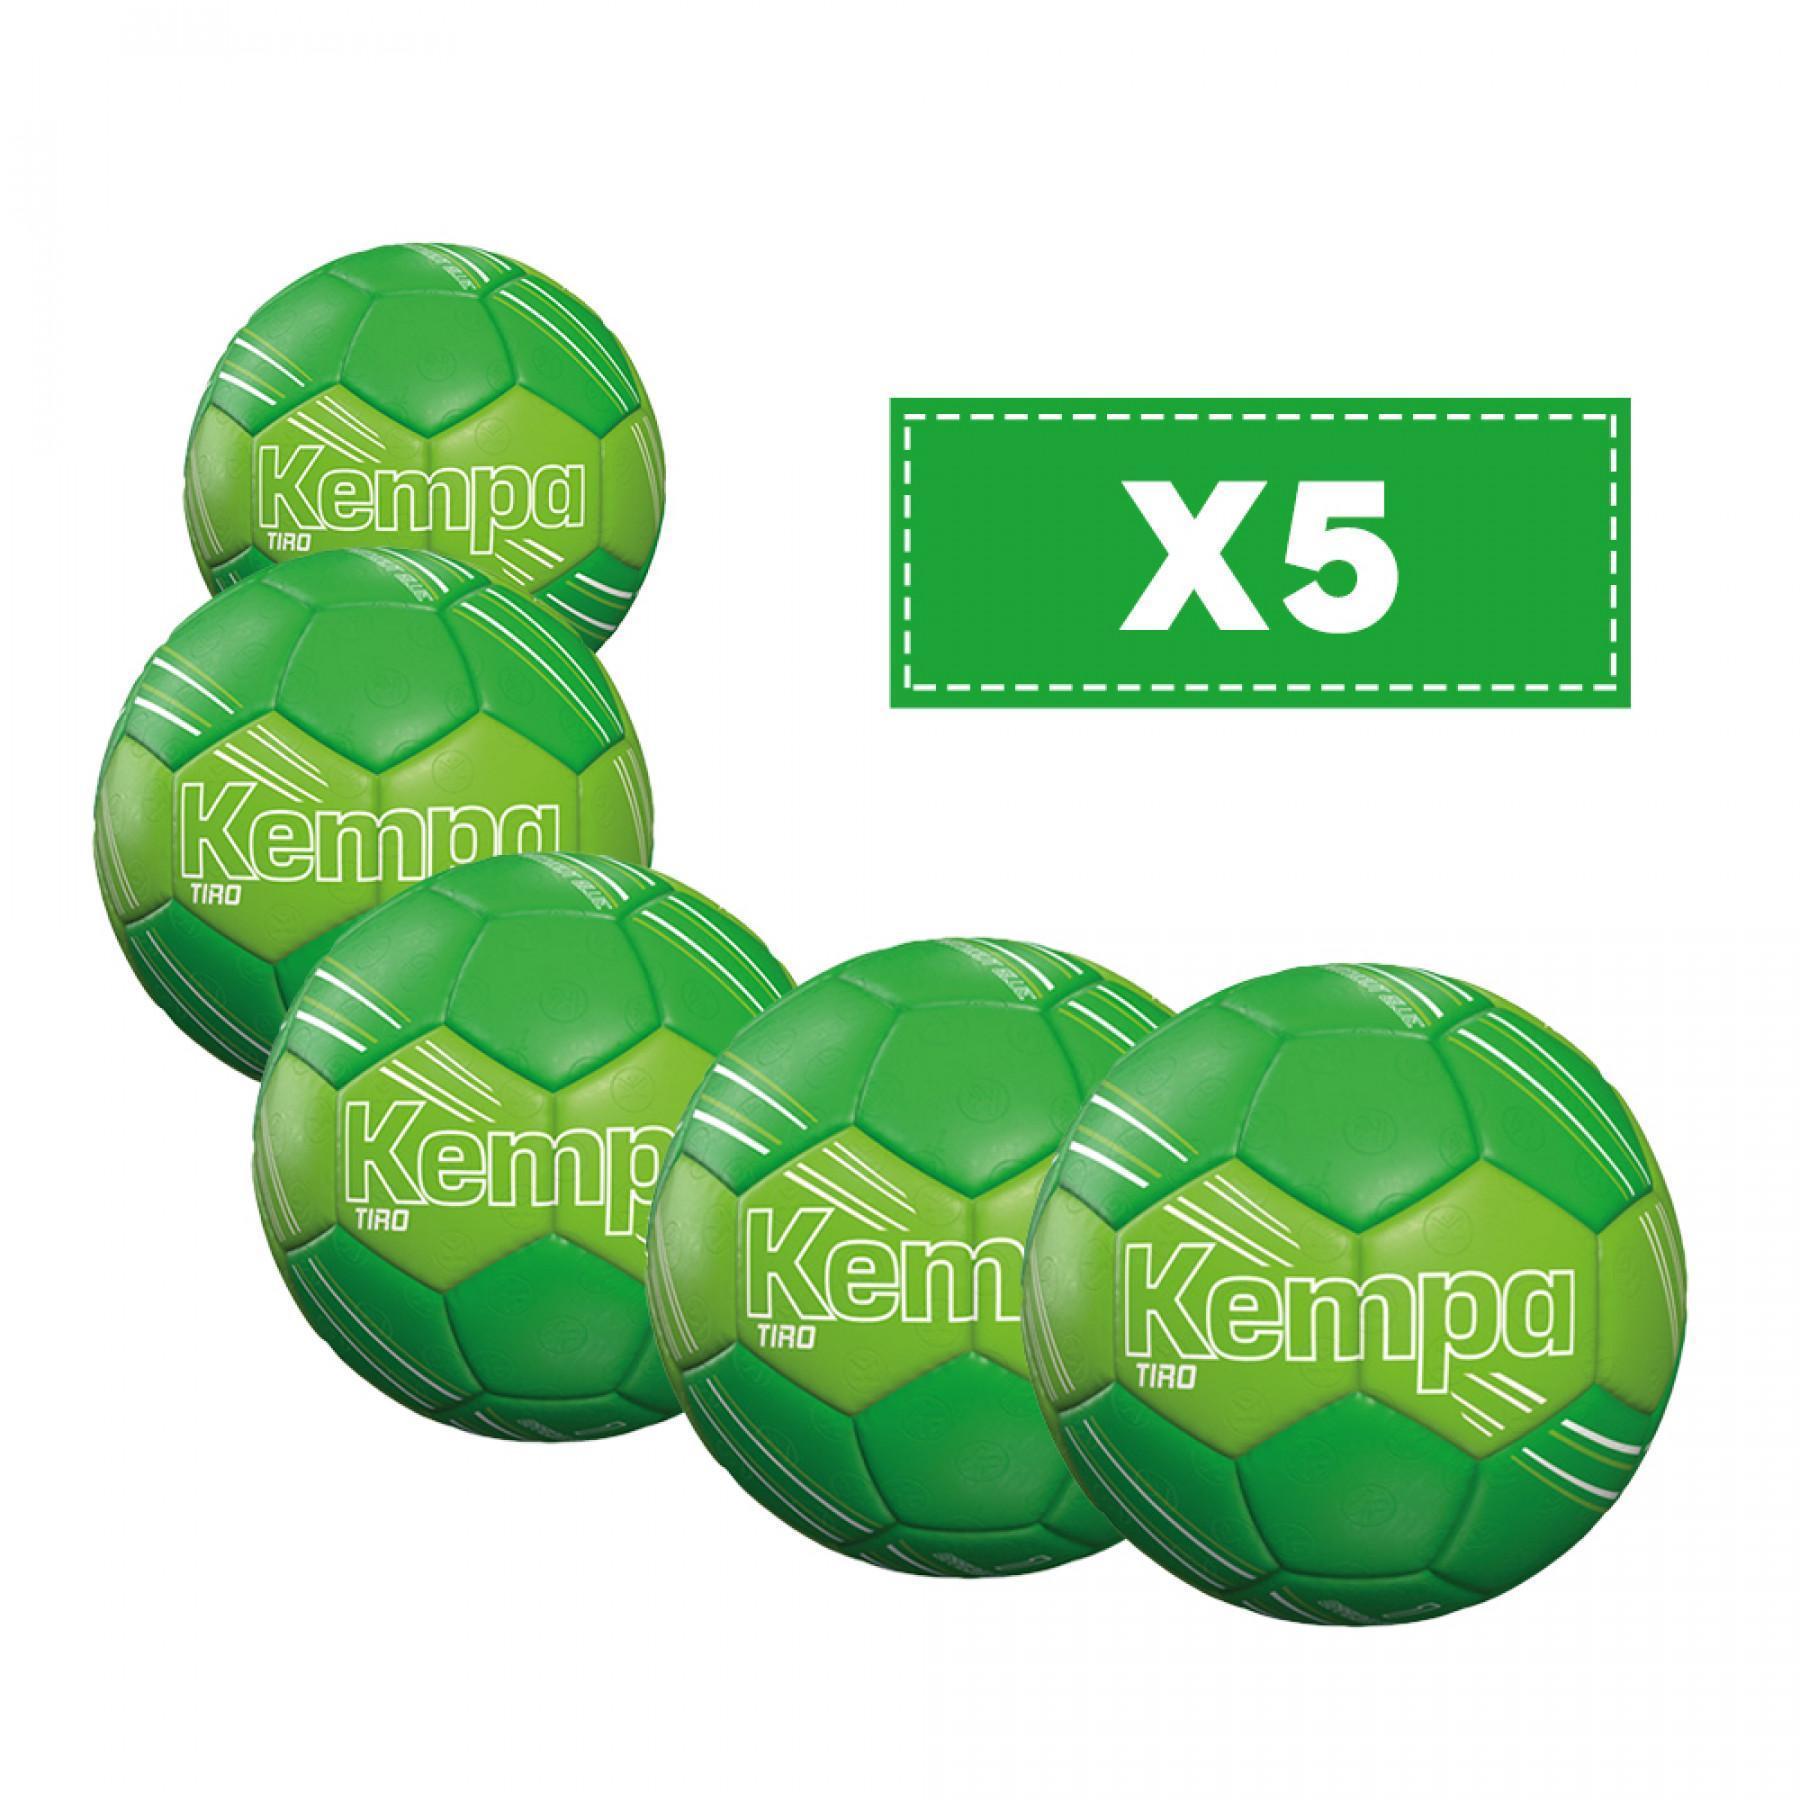 Conjunto de 5 balões Kempa Tiro